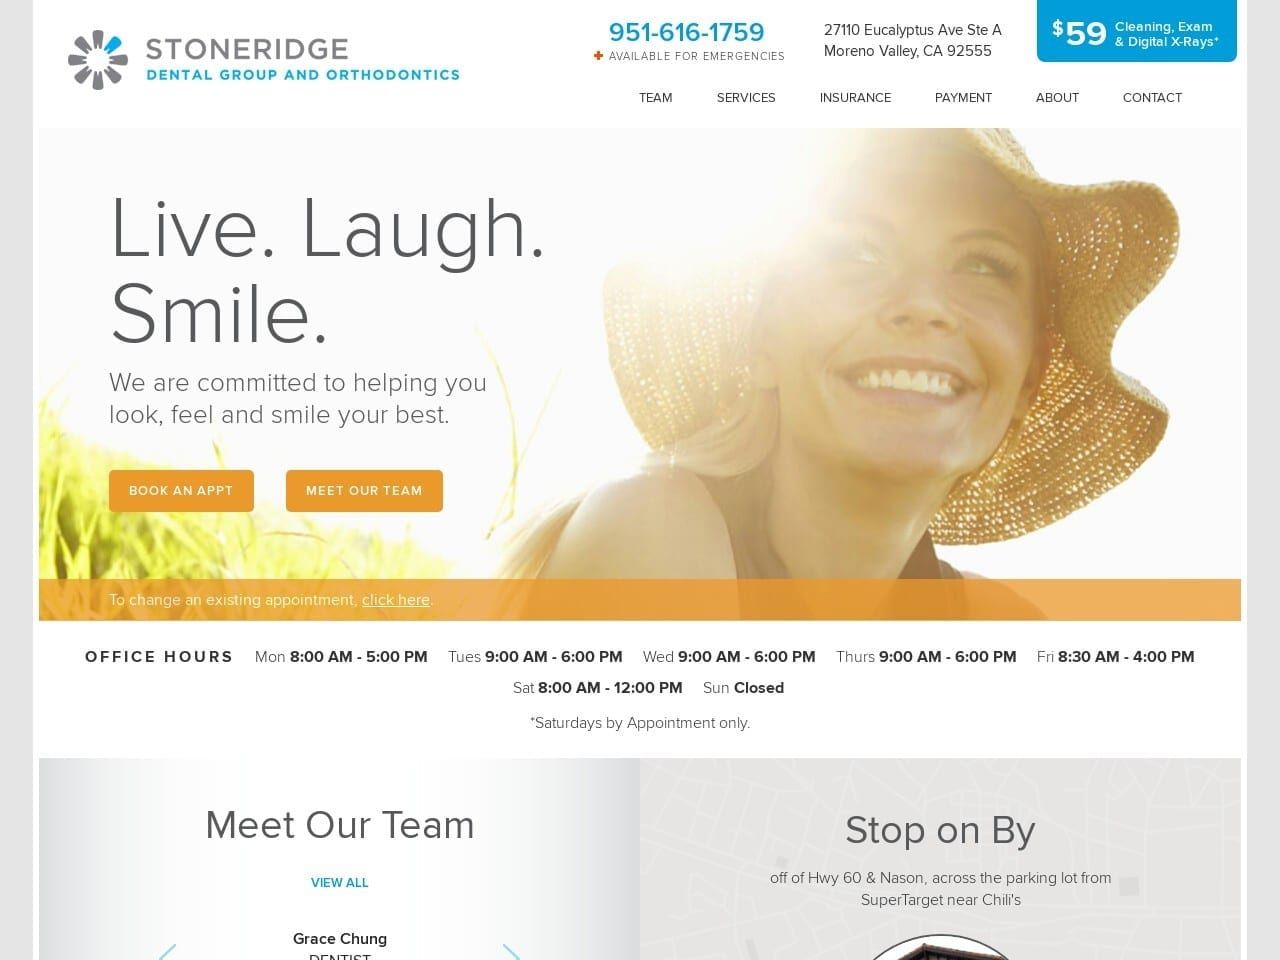 Stoneridge Dental Group and Orthodontics Website Screenshot from stoneridgedentalgroup.com